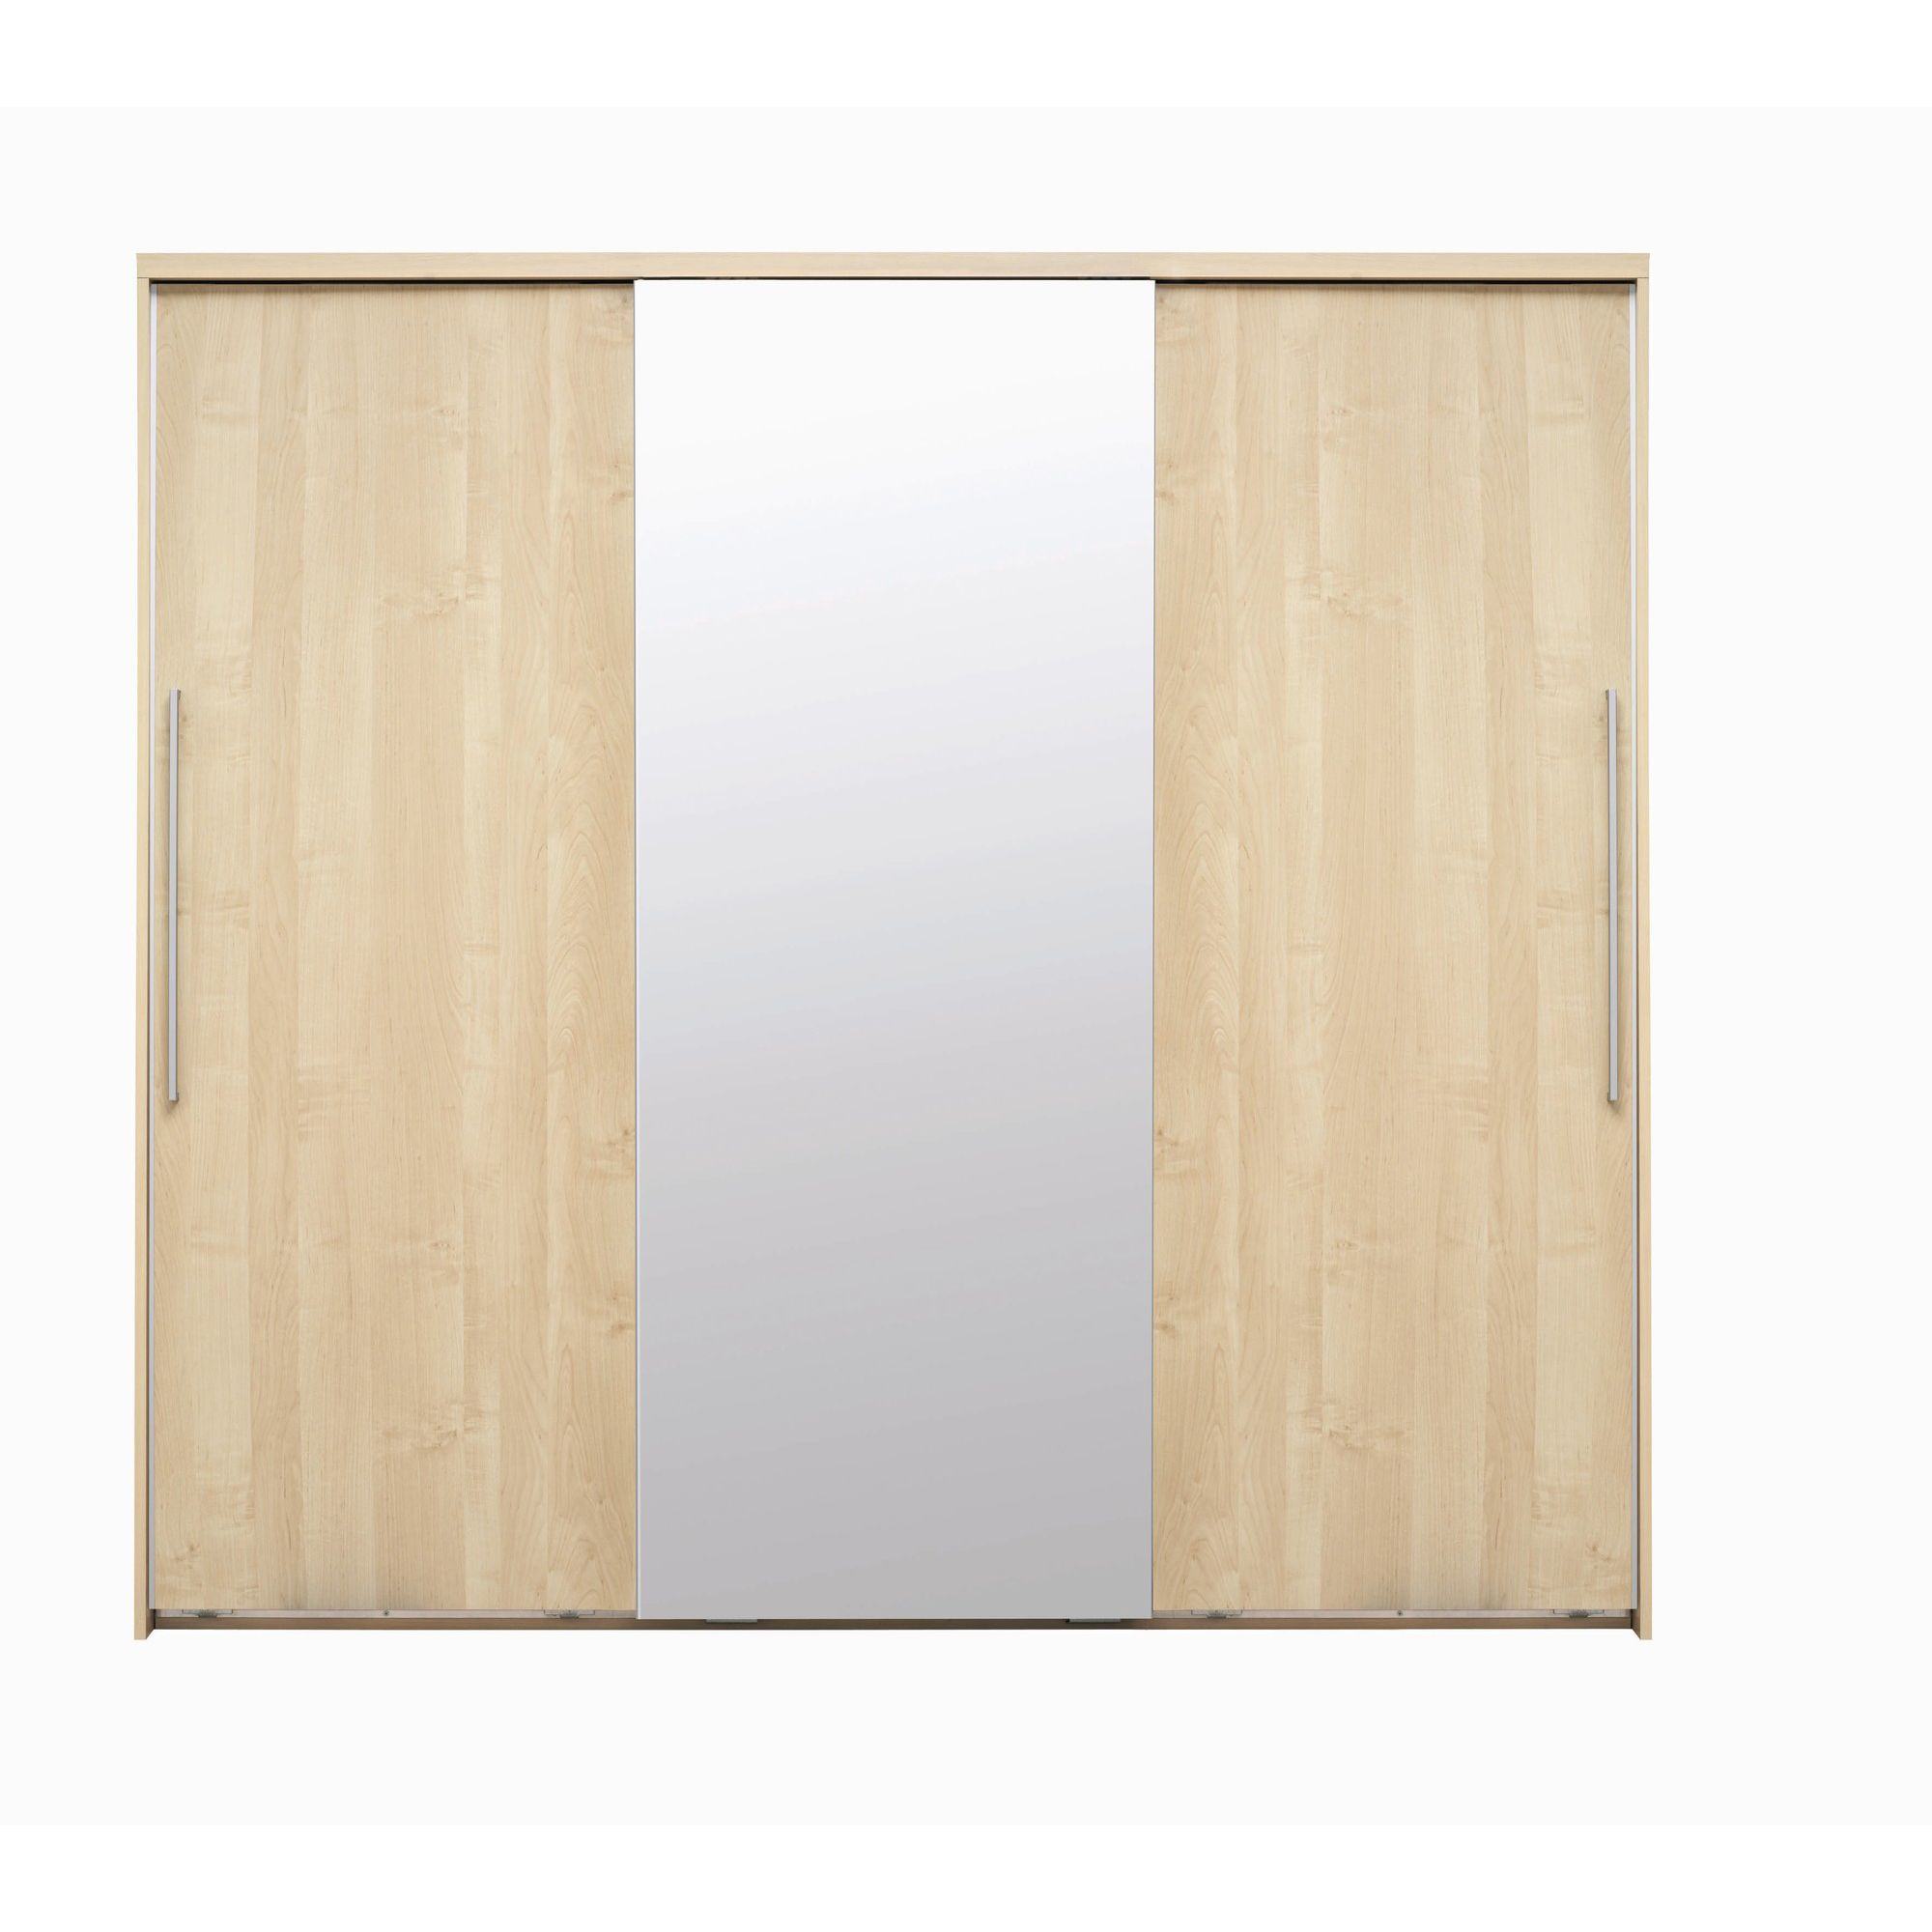 Caxton Strata 3 Door Mirrored Sliding Wardrobe in Pear Wood at Tesco Direct